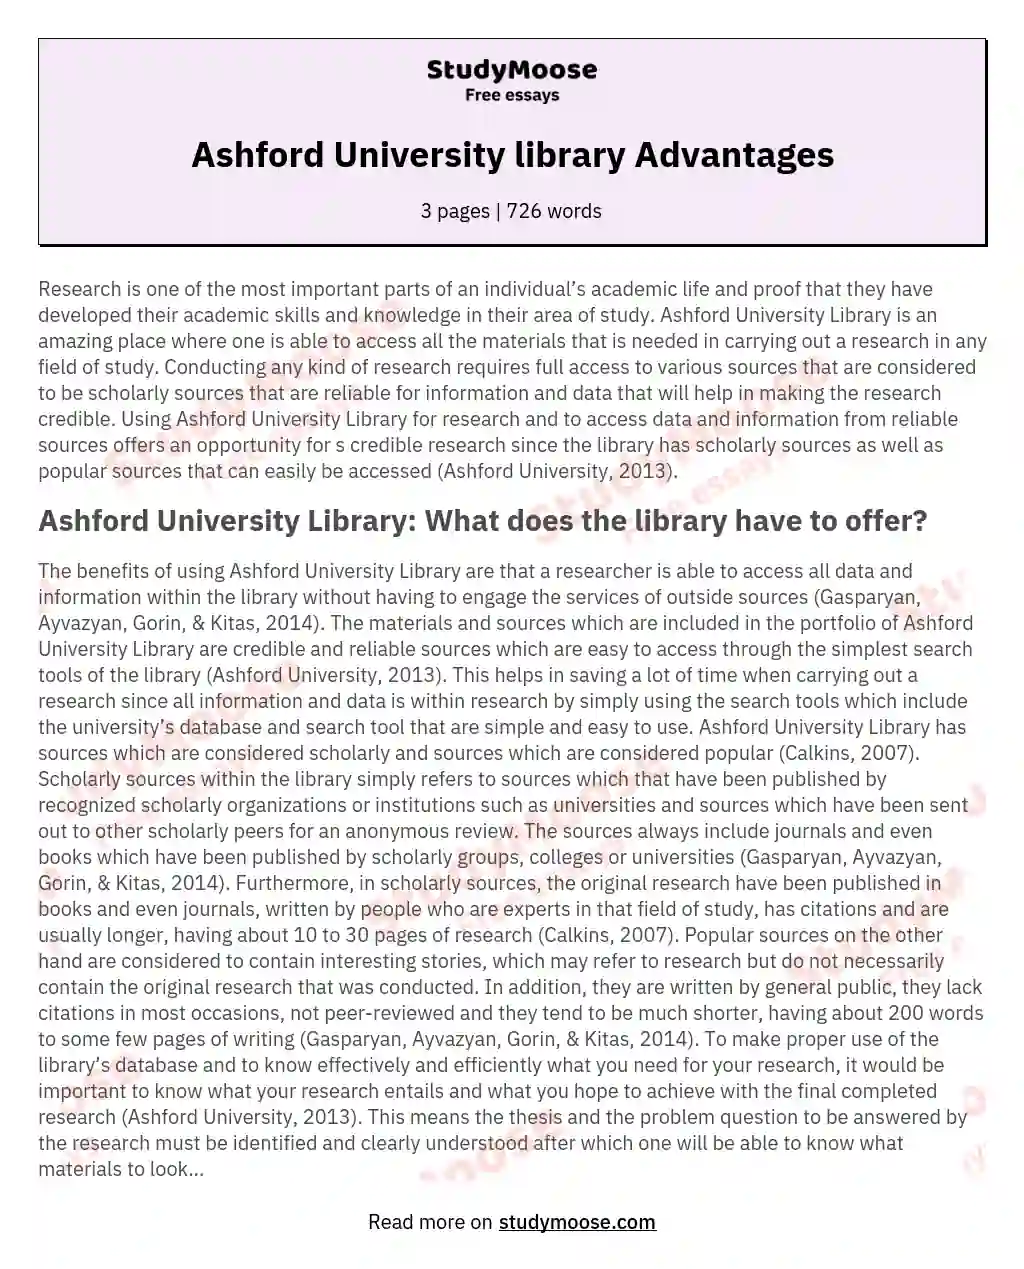 Ashford University library Advantages essay